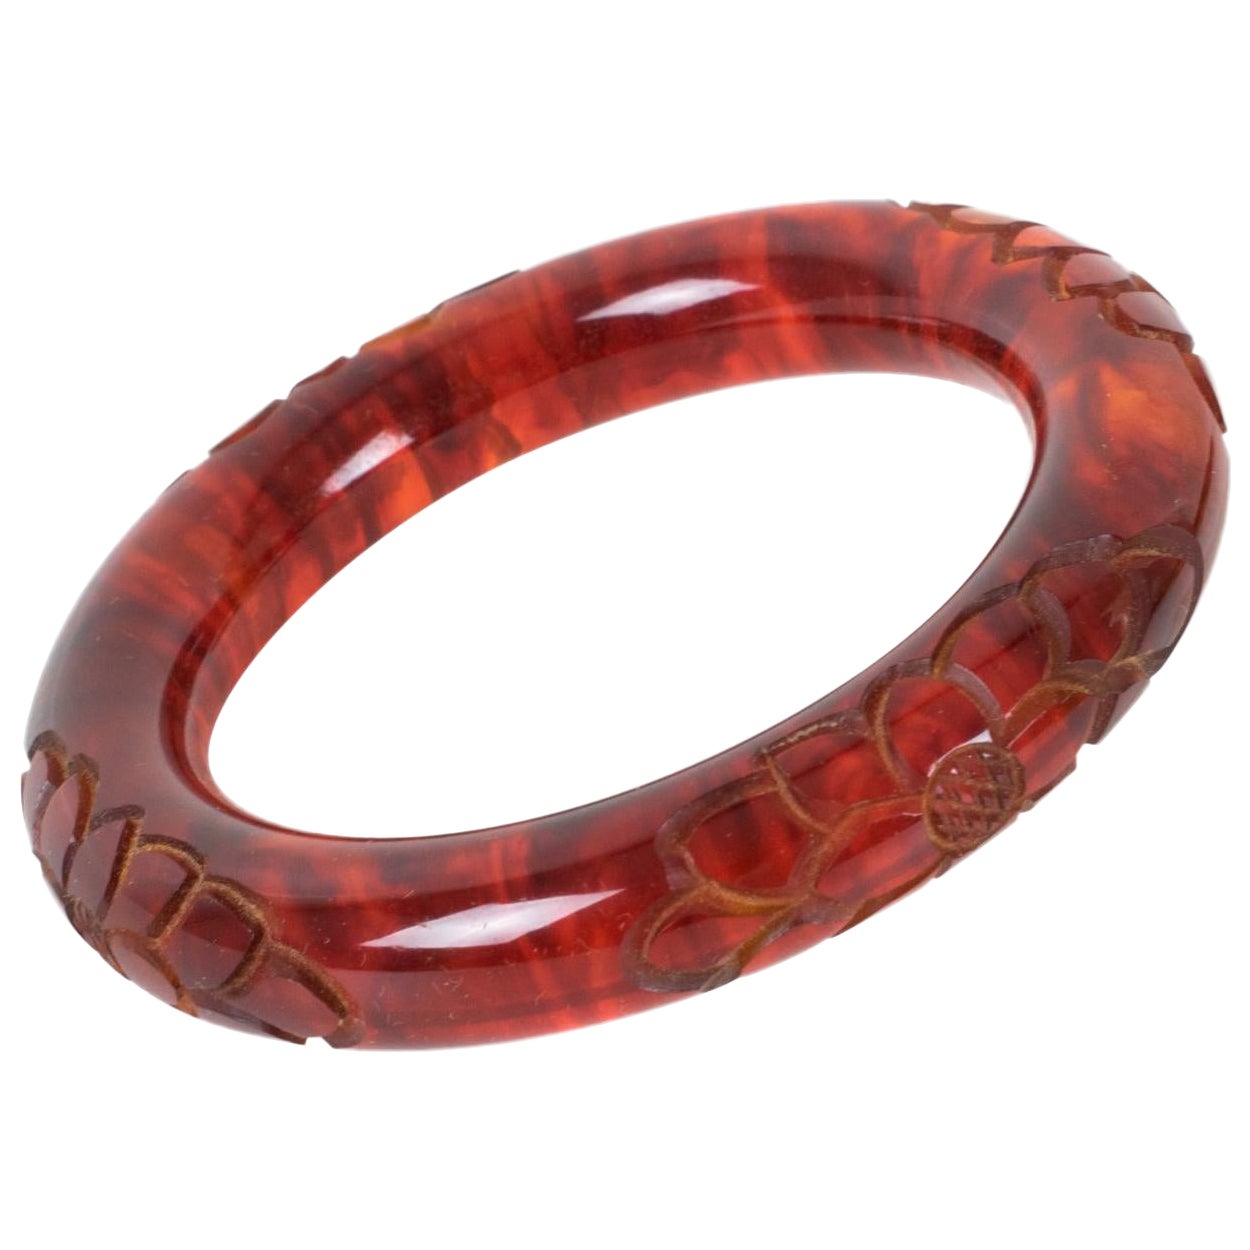 Bakelite Carved Bracelet Bangle in Cloudy Red Tea Amber Color For Sale